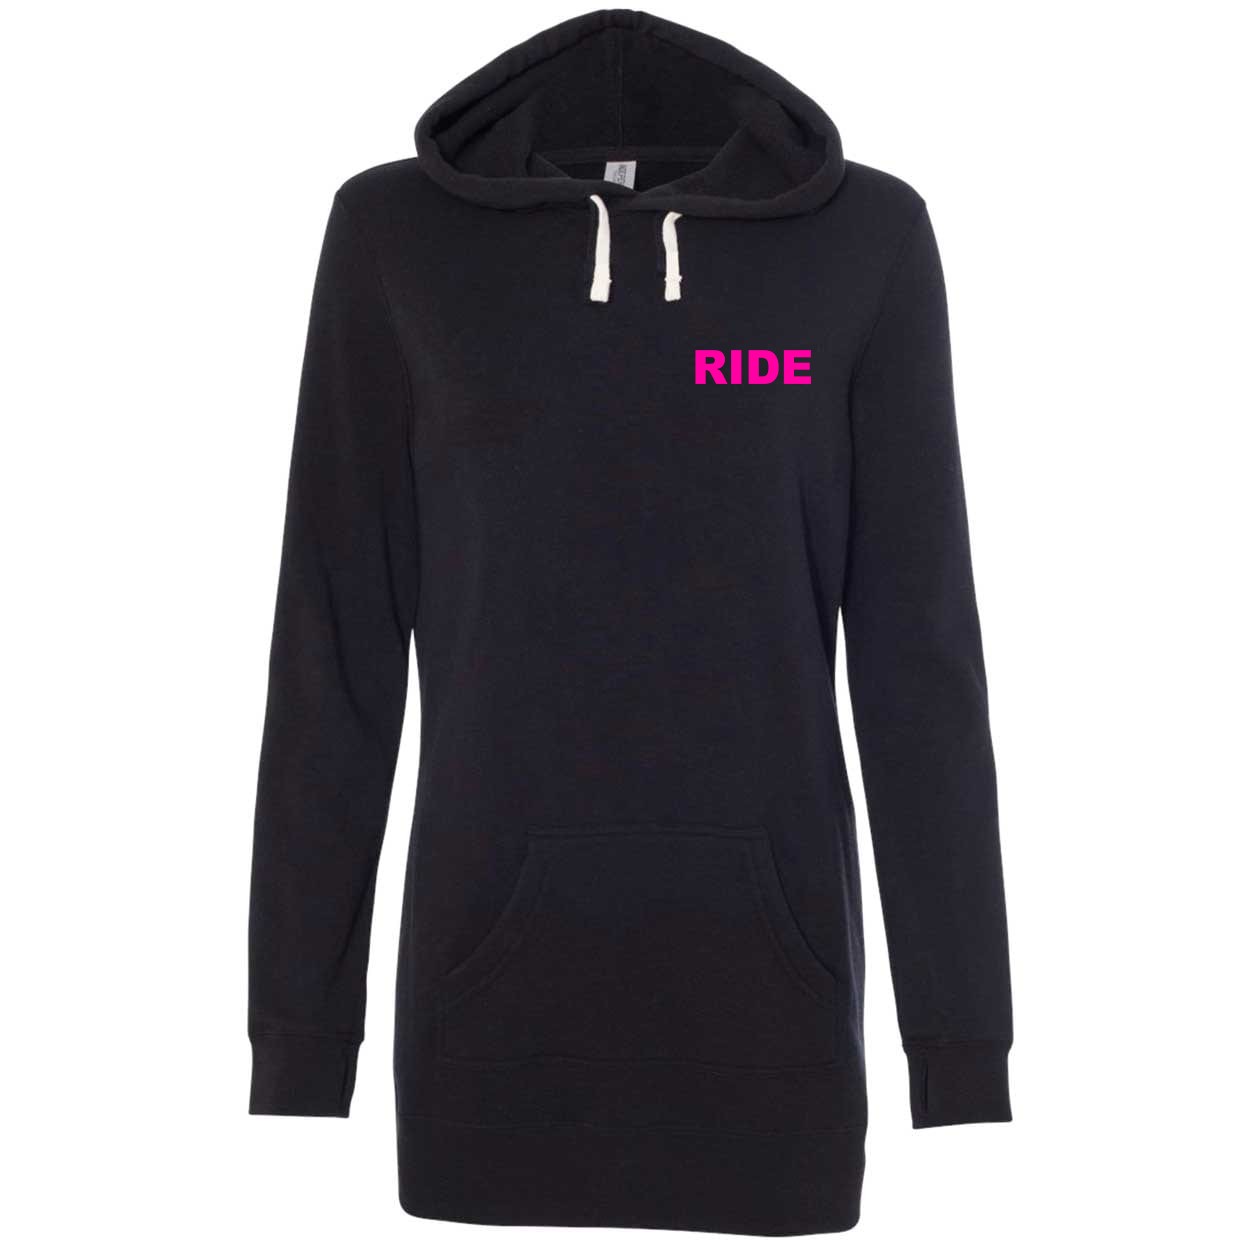 Ride Brand Logo Night Out Womens Pullover Hooded Sweatshirt Dress Black (Pink Logo)